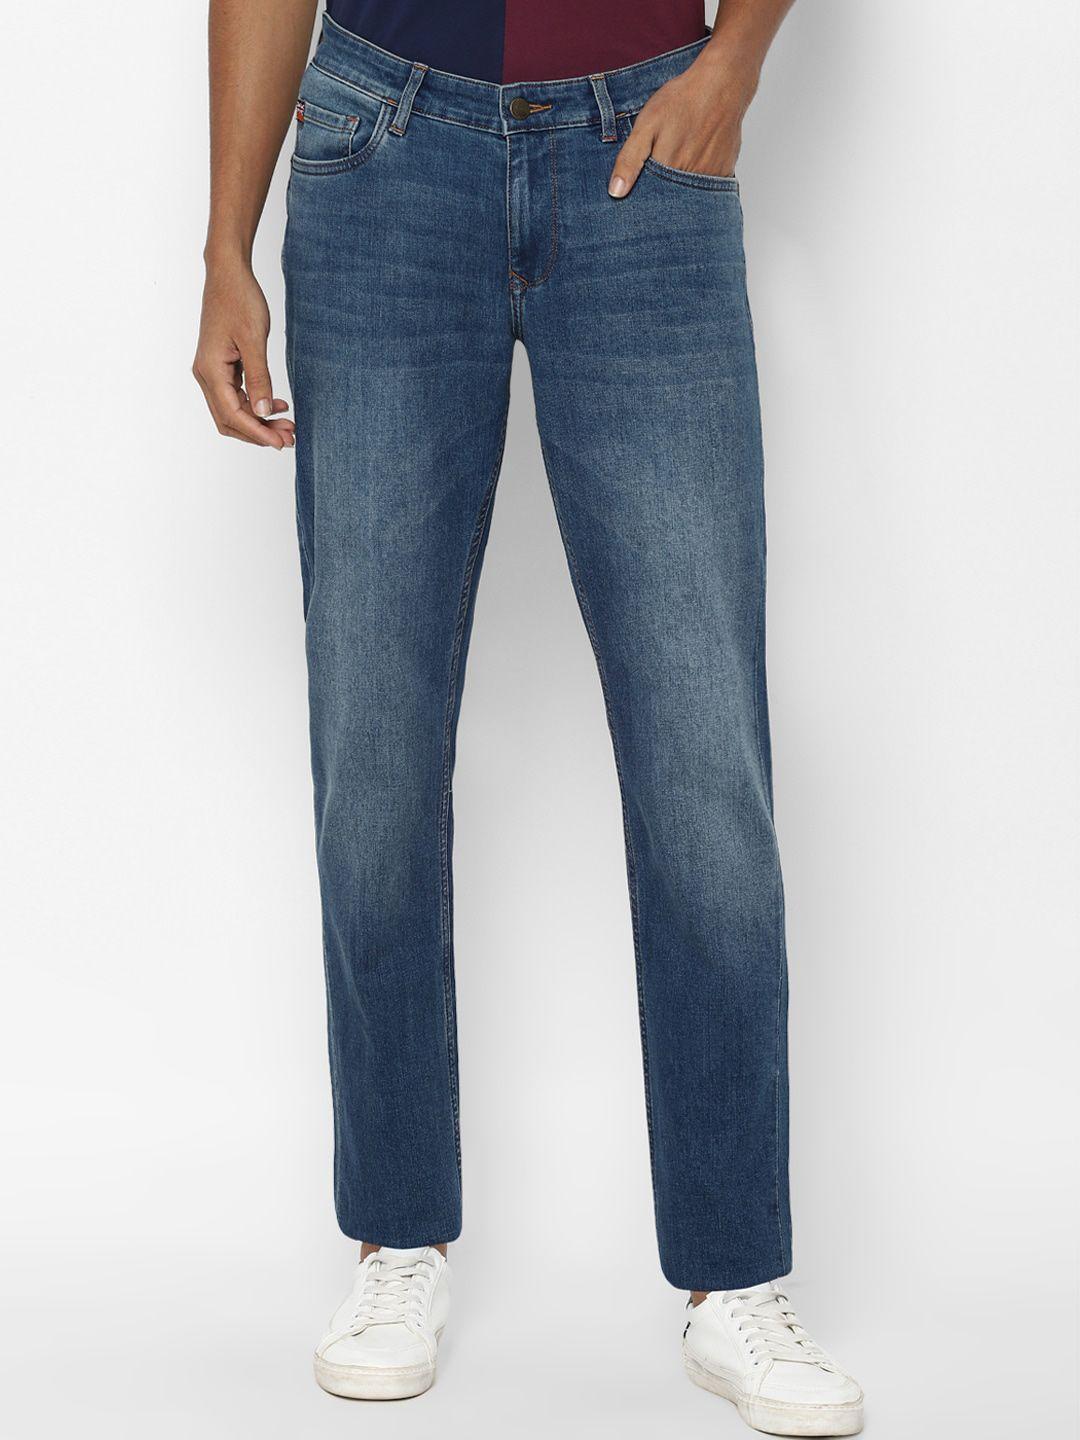 simon-carter-london-men-blue-slim-fit-heavy-fade-jeans